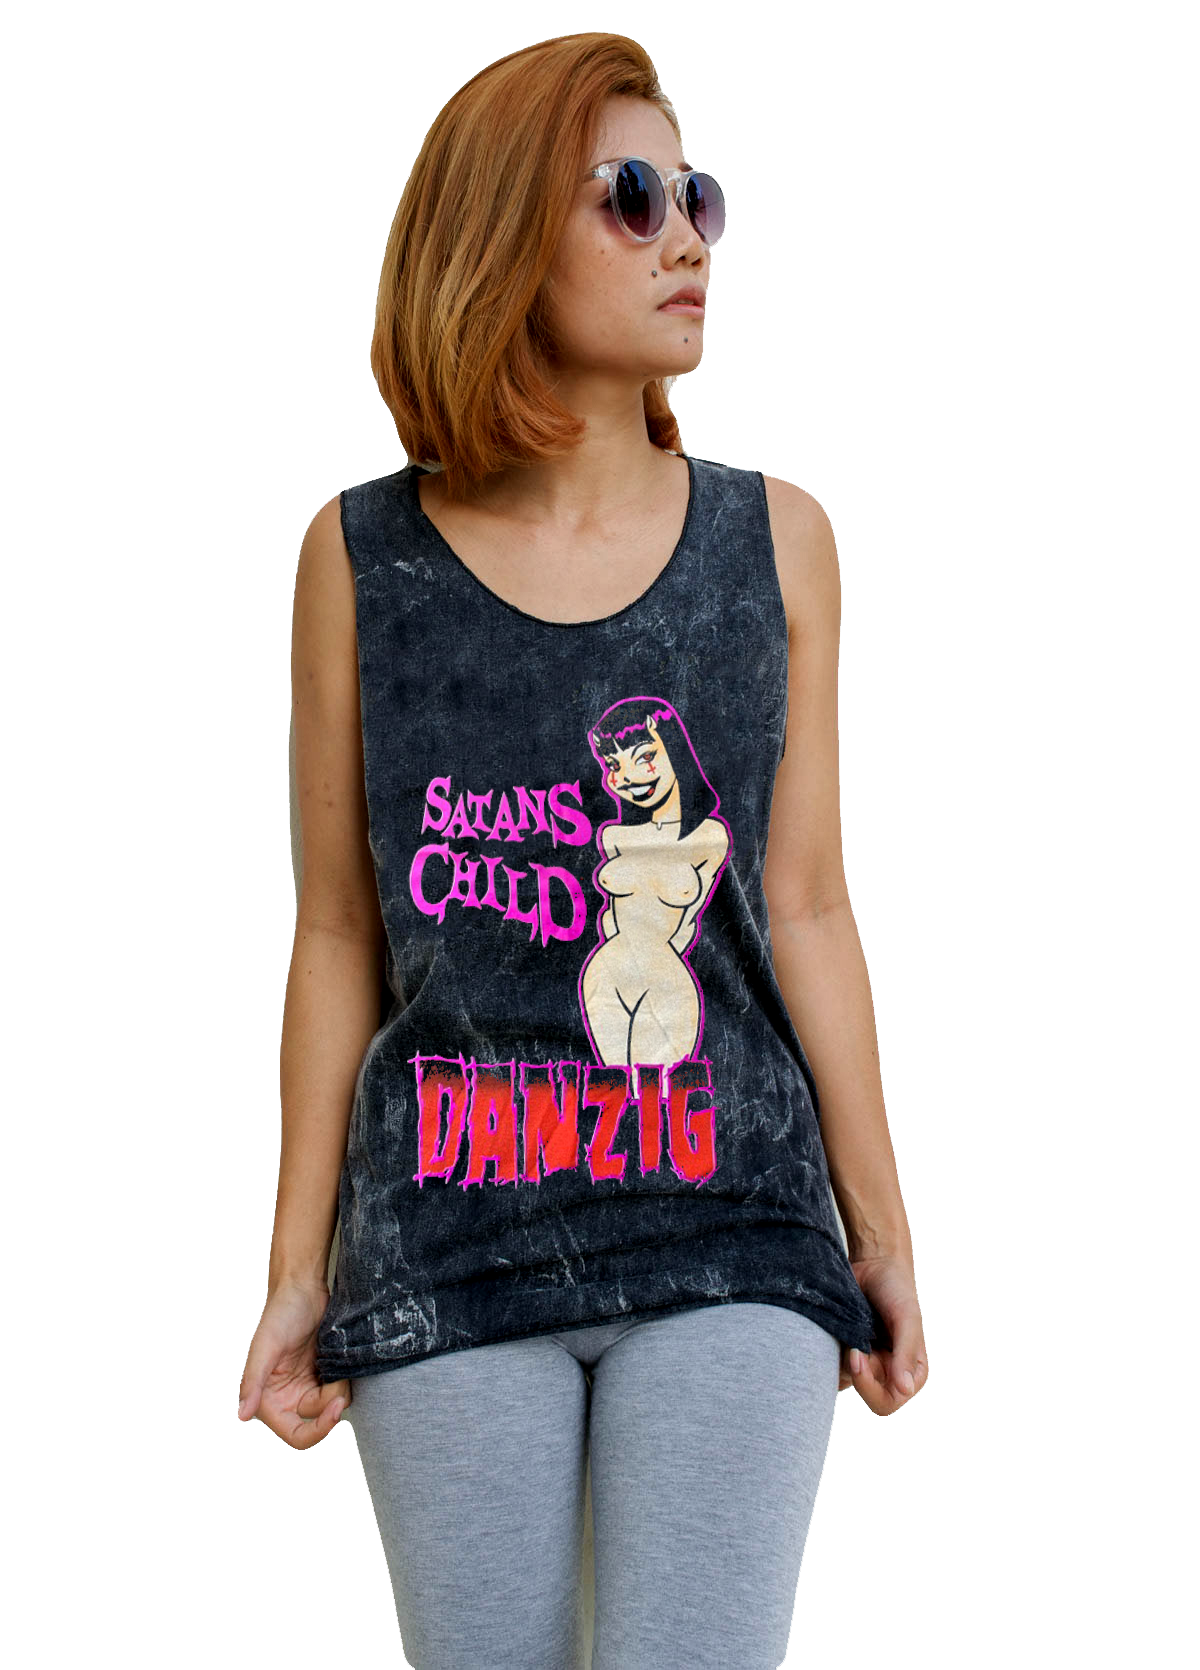 Unisex Danzig Tank-Top Singlet vest Sleeveless T-shirt